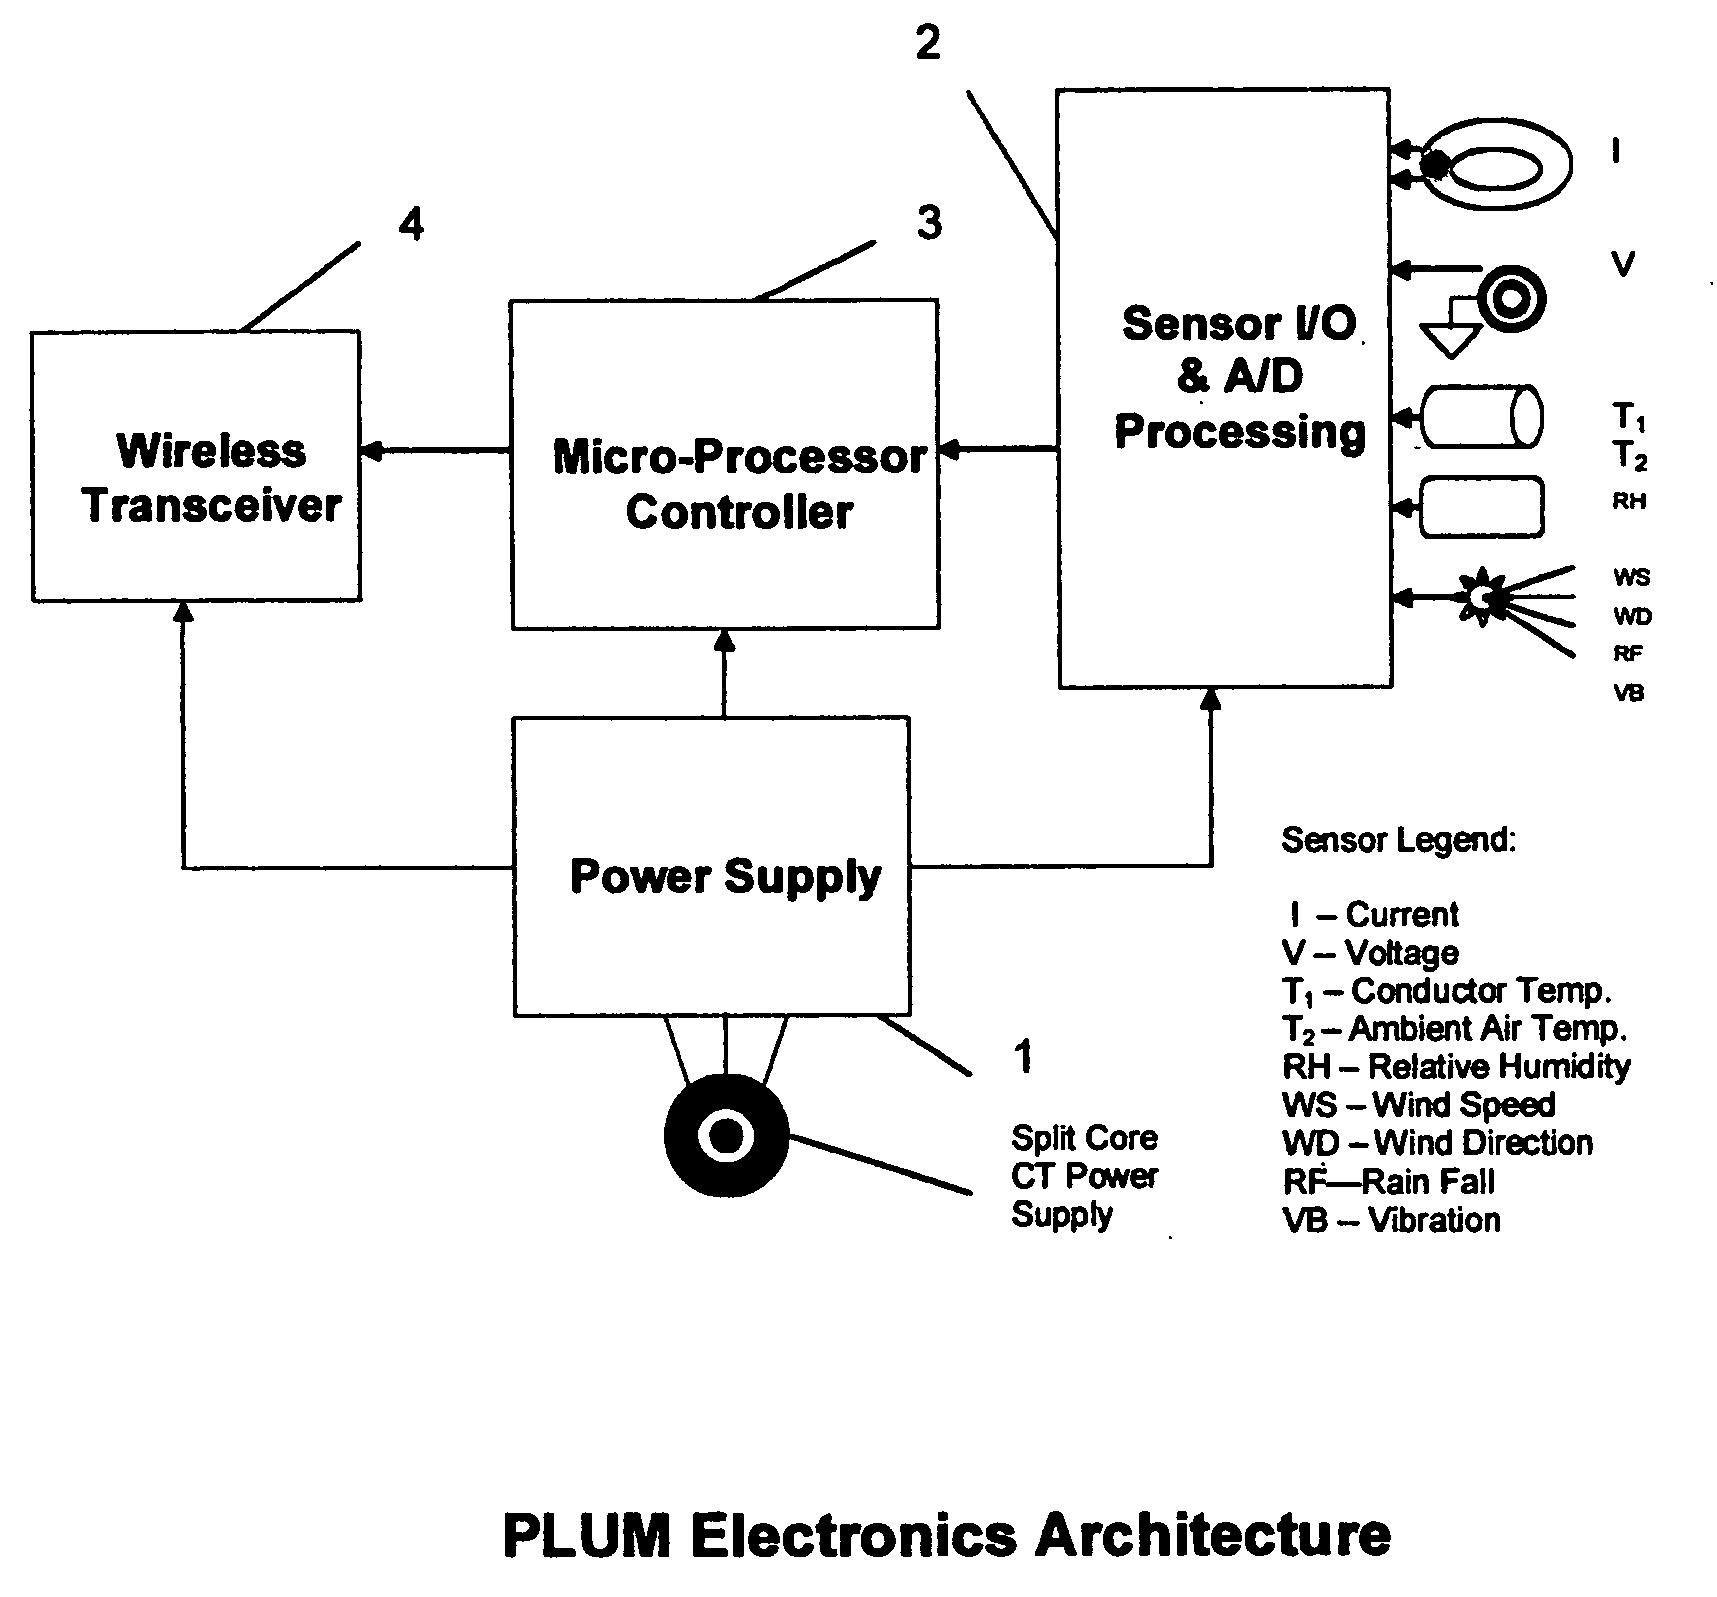 Power line universal monitor